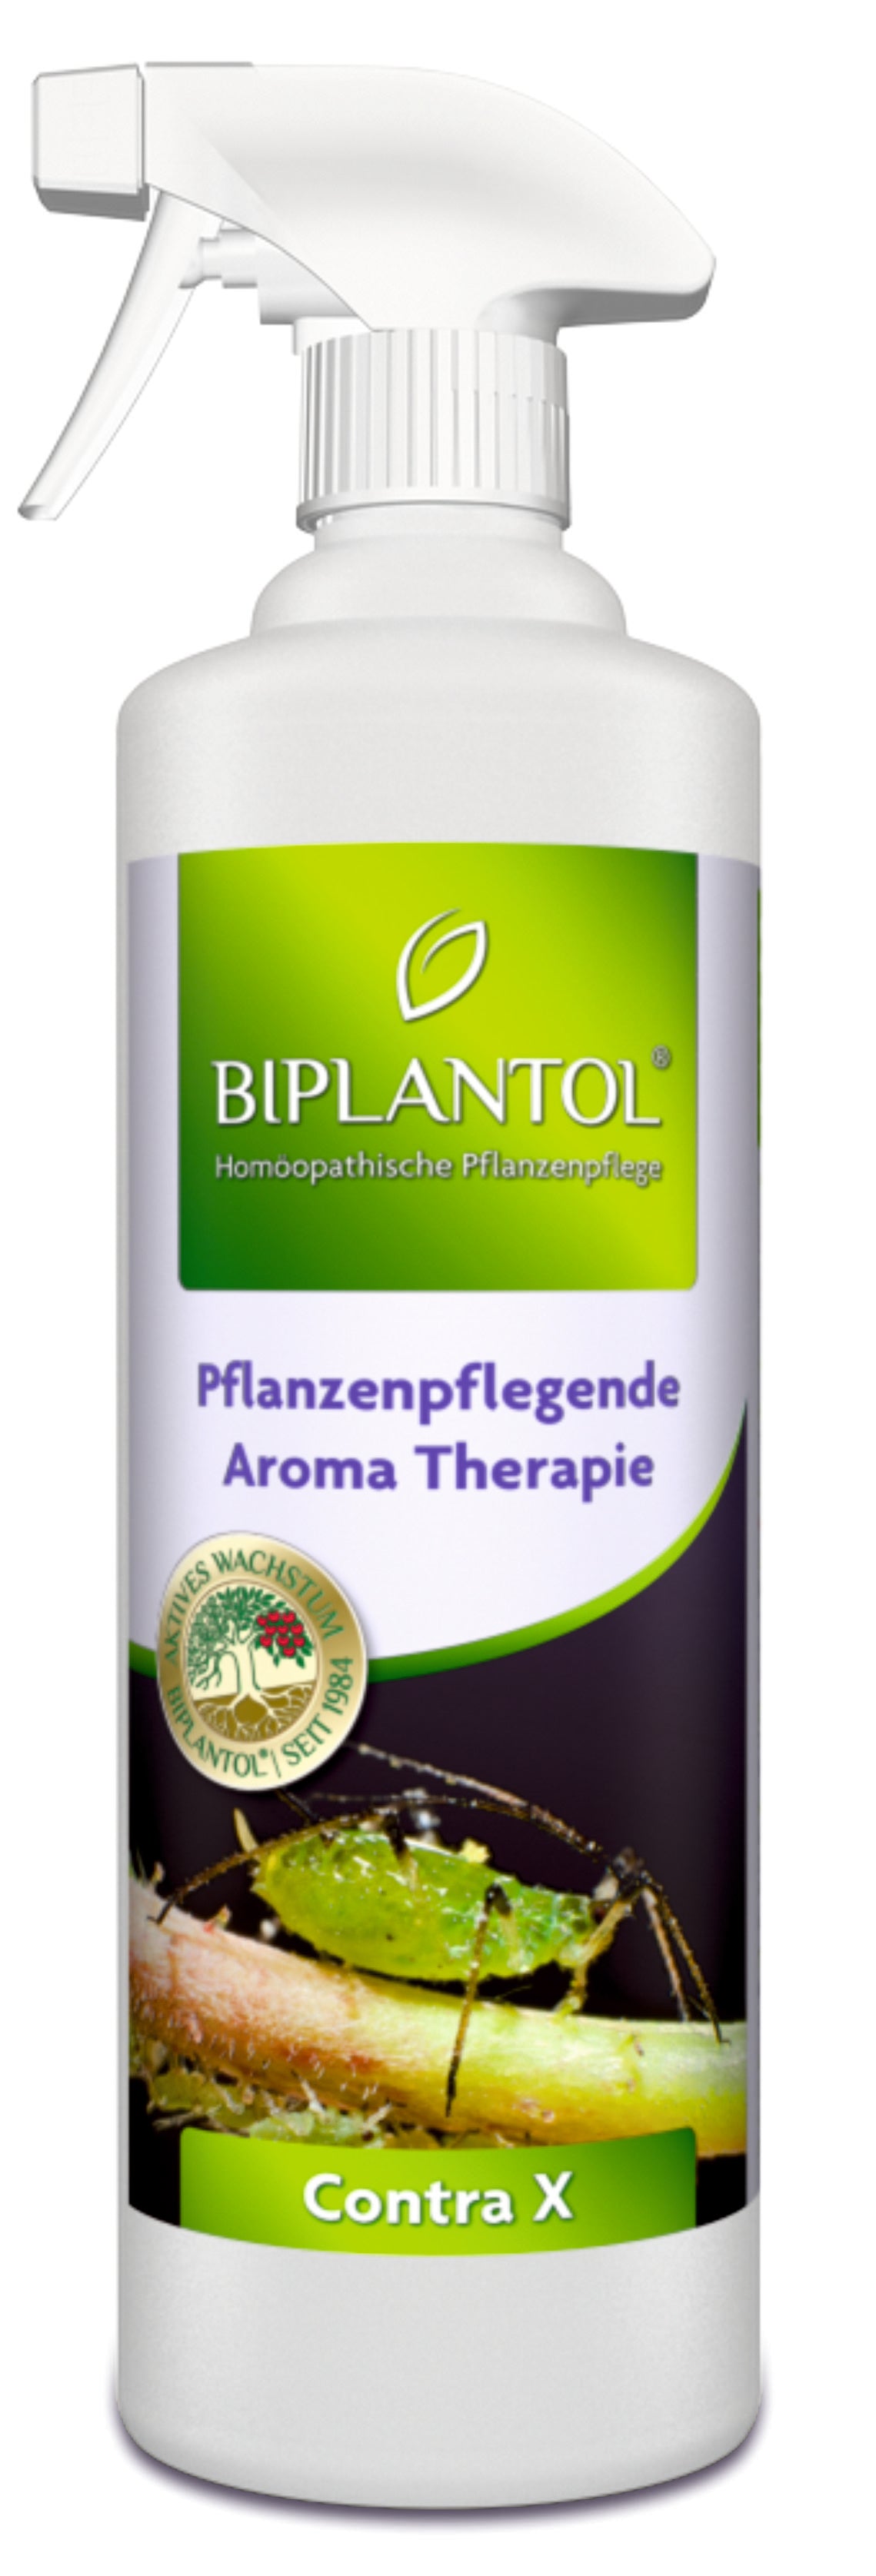 Biplantol® Pflanzenpflege Contra X